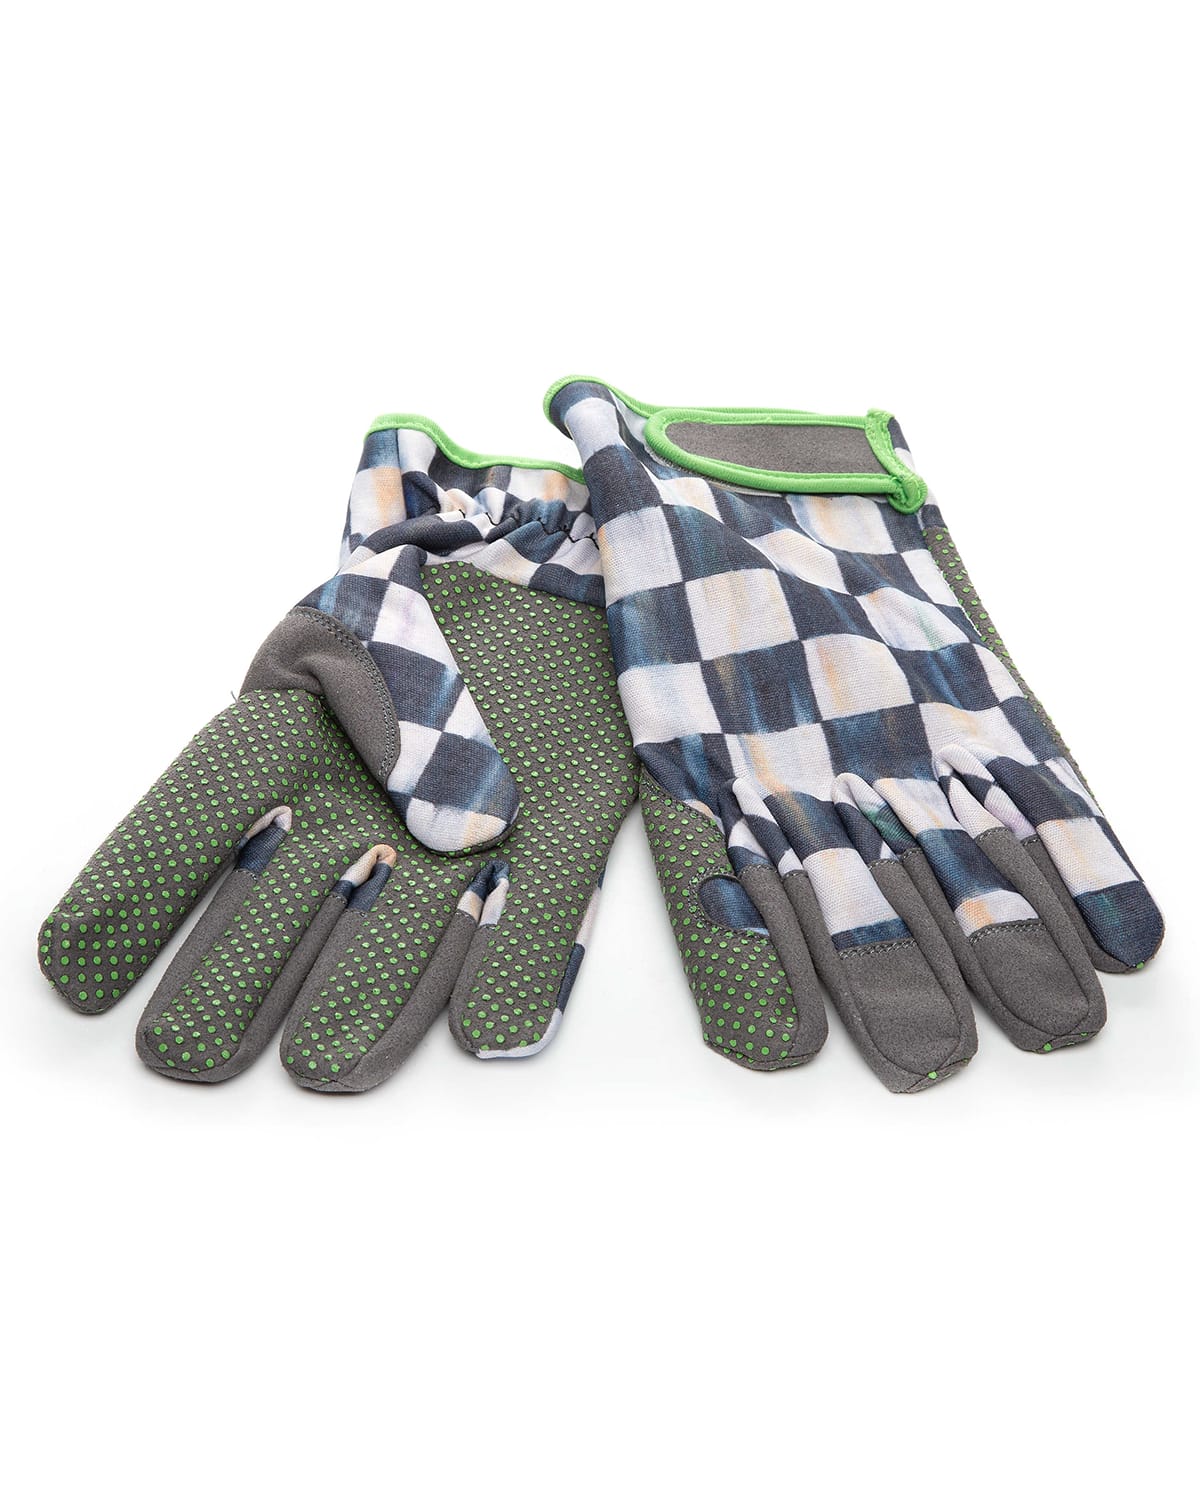 Courtly Check Garden Gloves - Medium